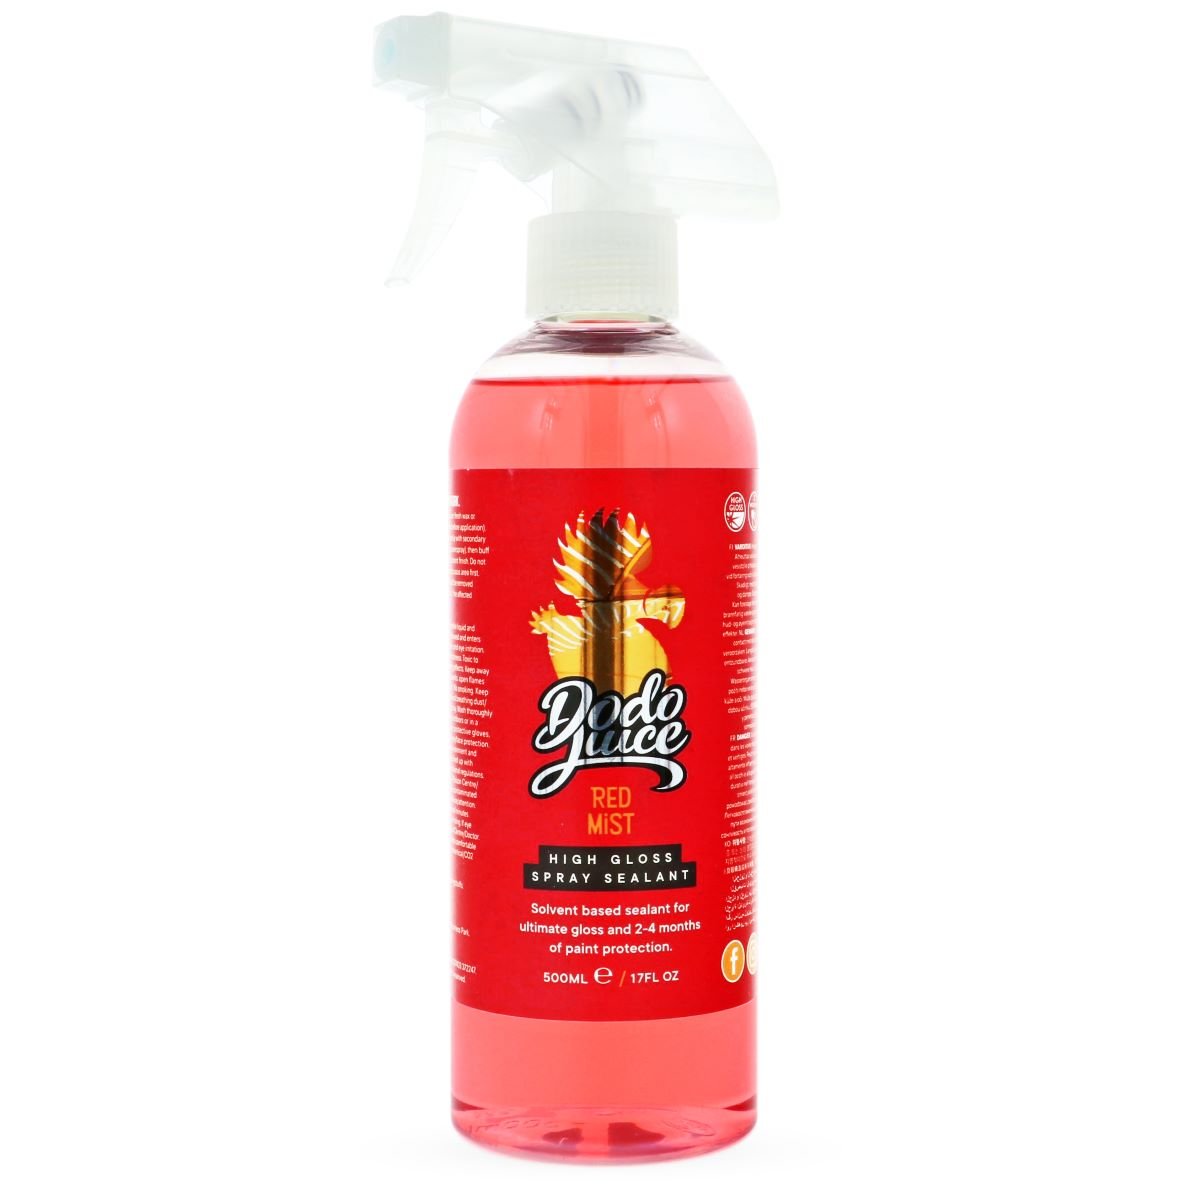 Red Mist High Gloss Spray Sealant - 500ml